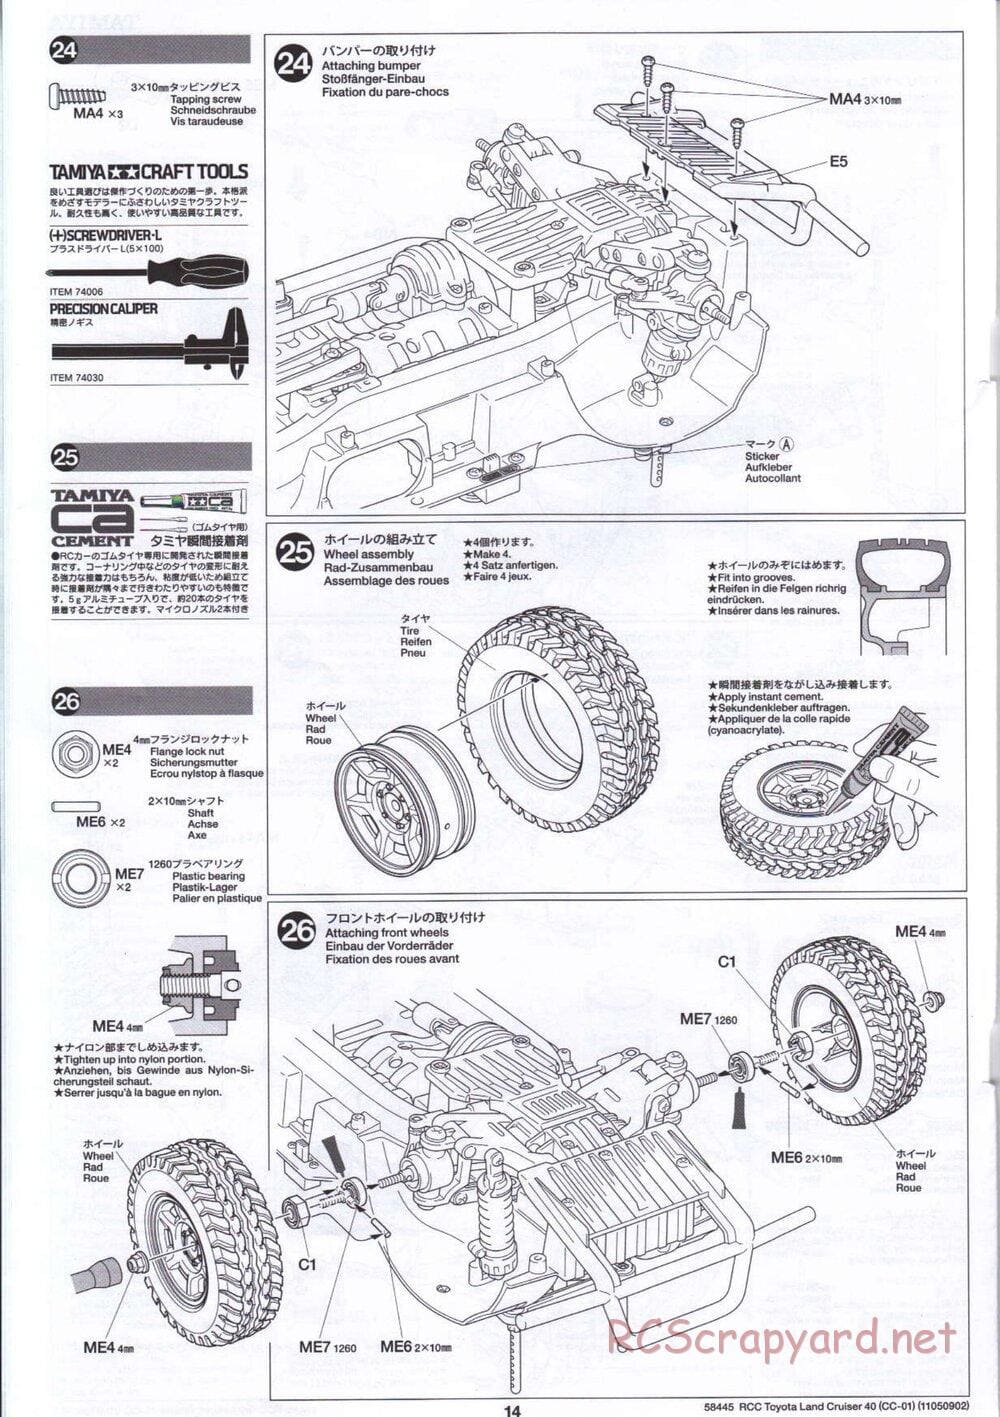 Tamiya - Toyota Land Cruiser 40 - CC-01 Chassis - Manual - Page 14